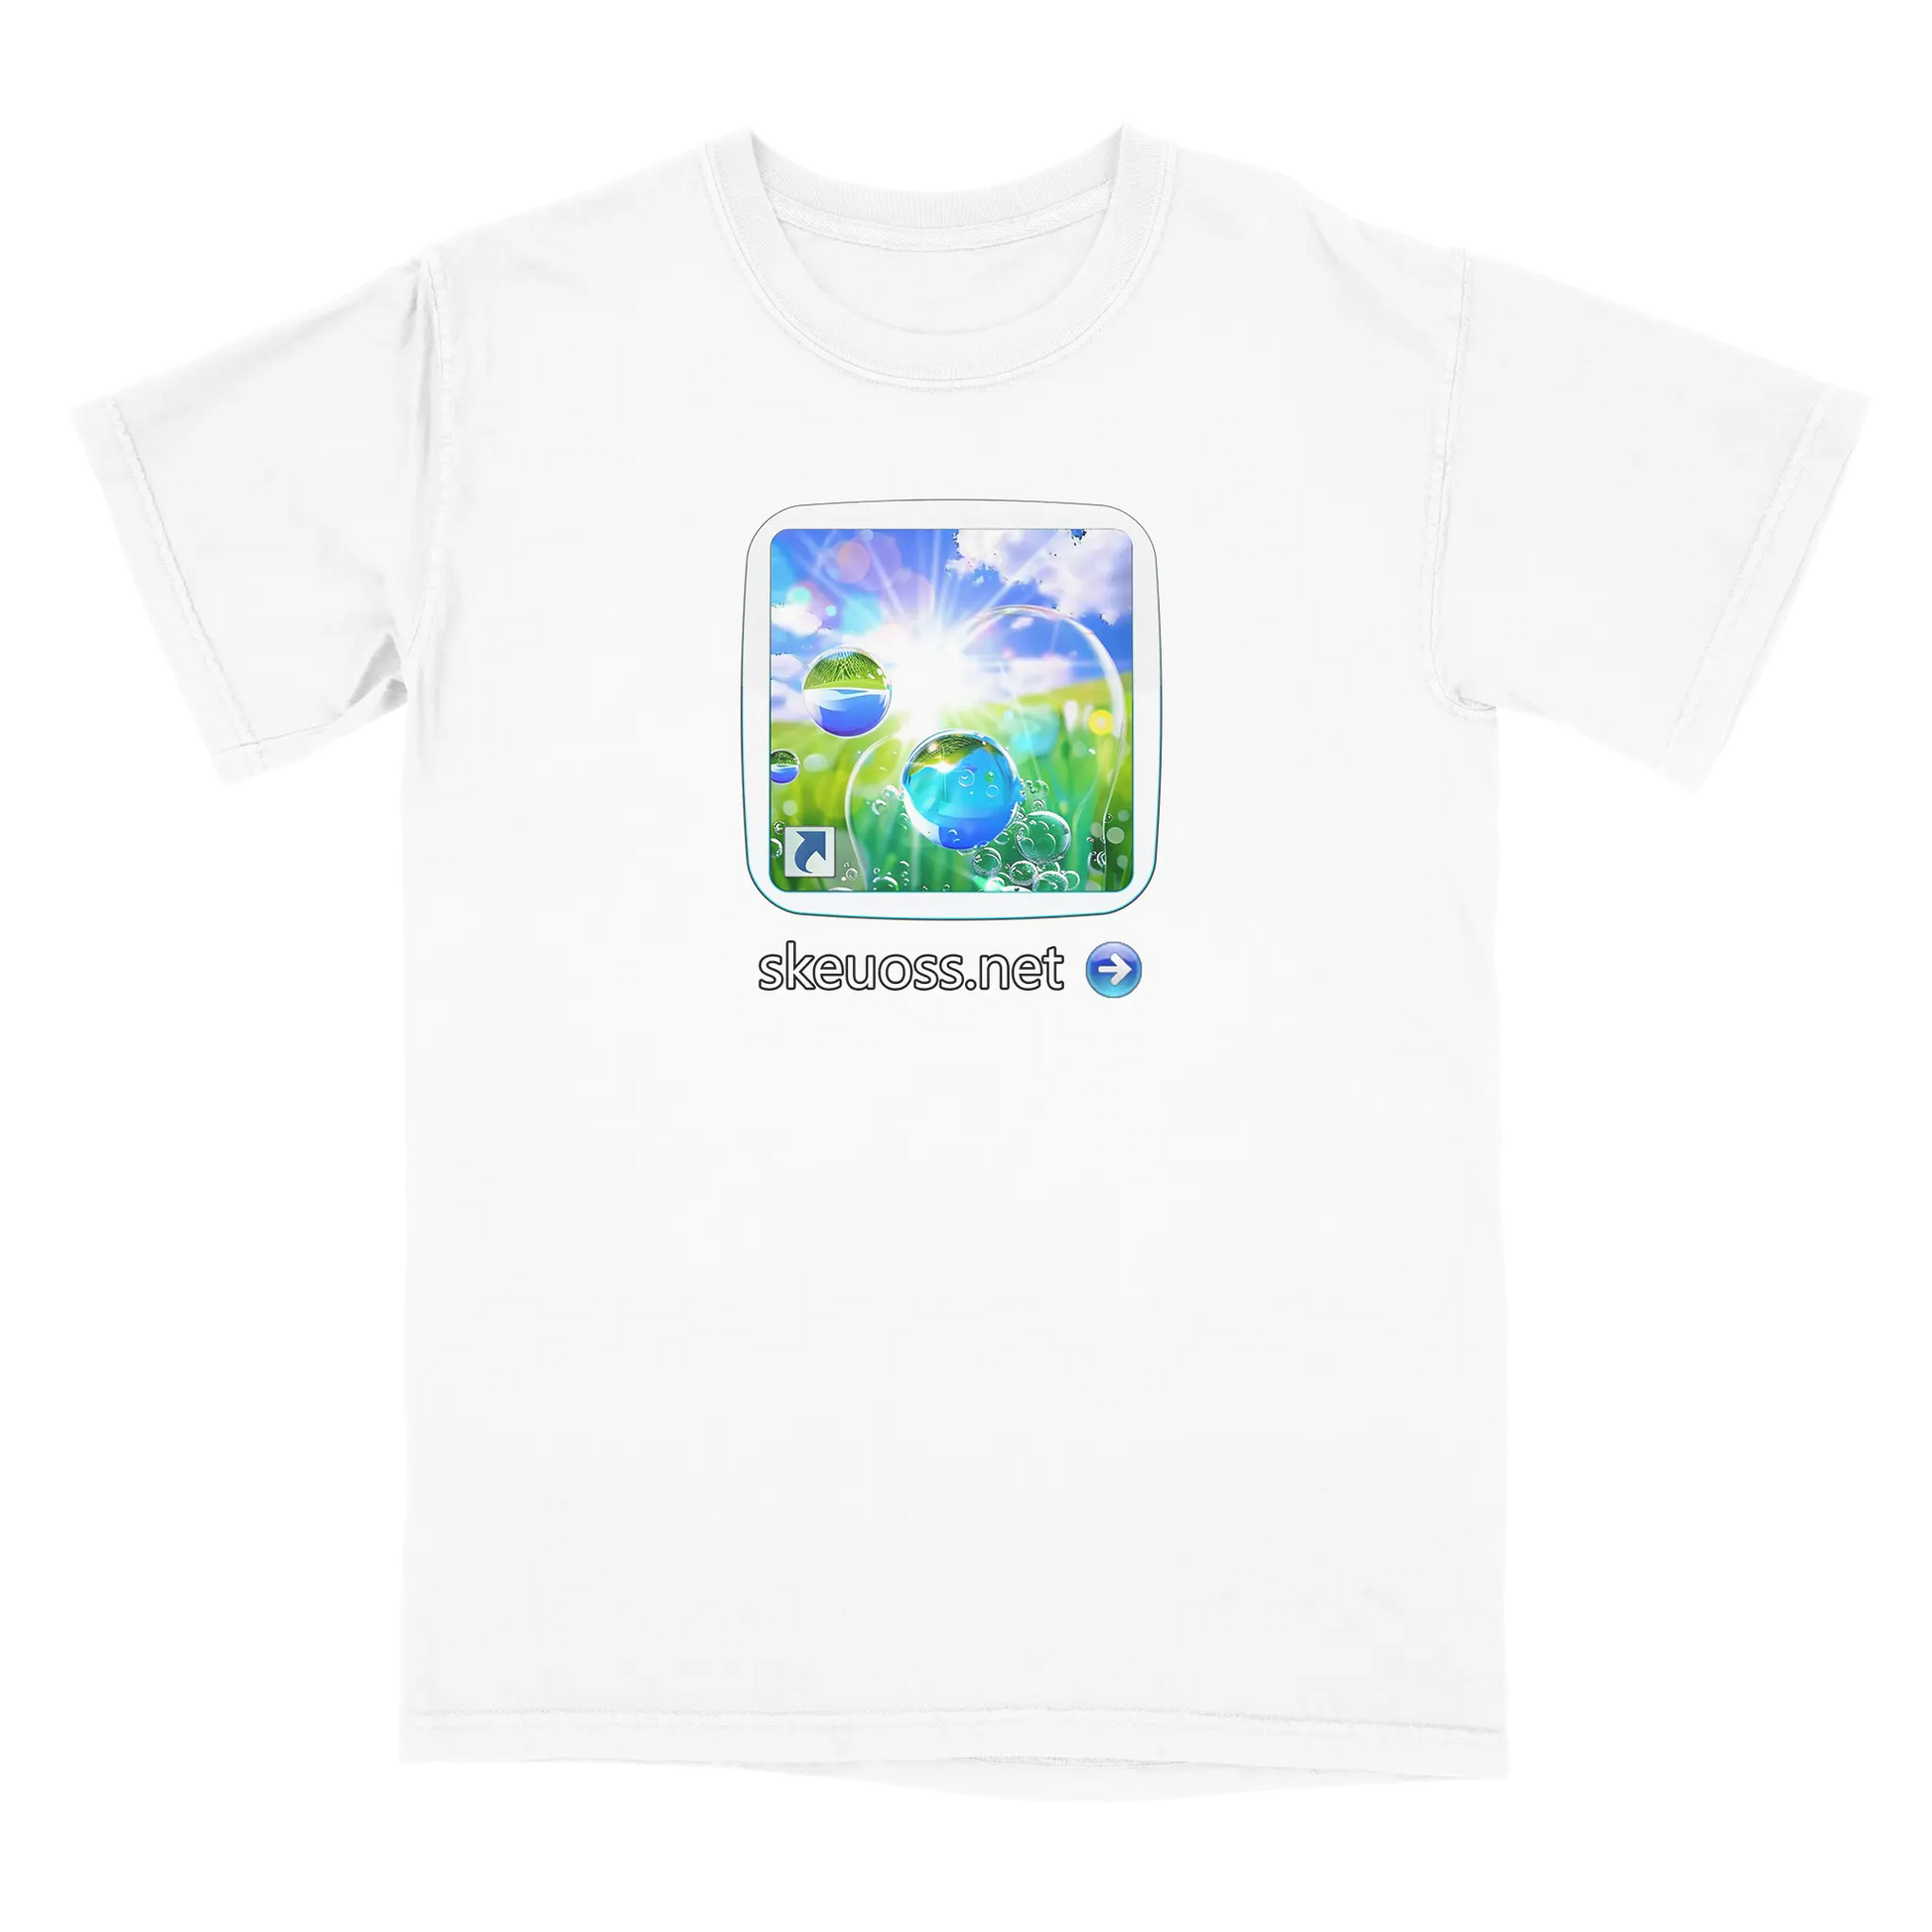 Frutiger Aero T-shirt - User Login Collection - User 251